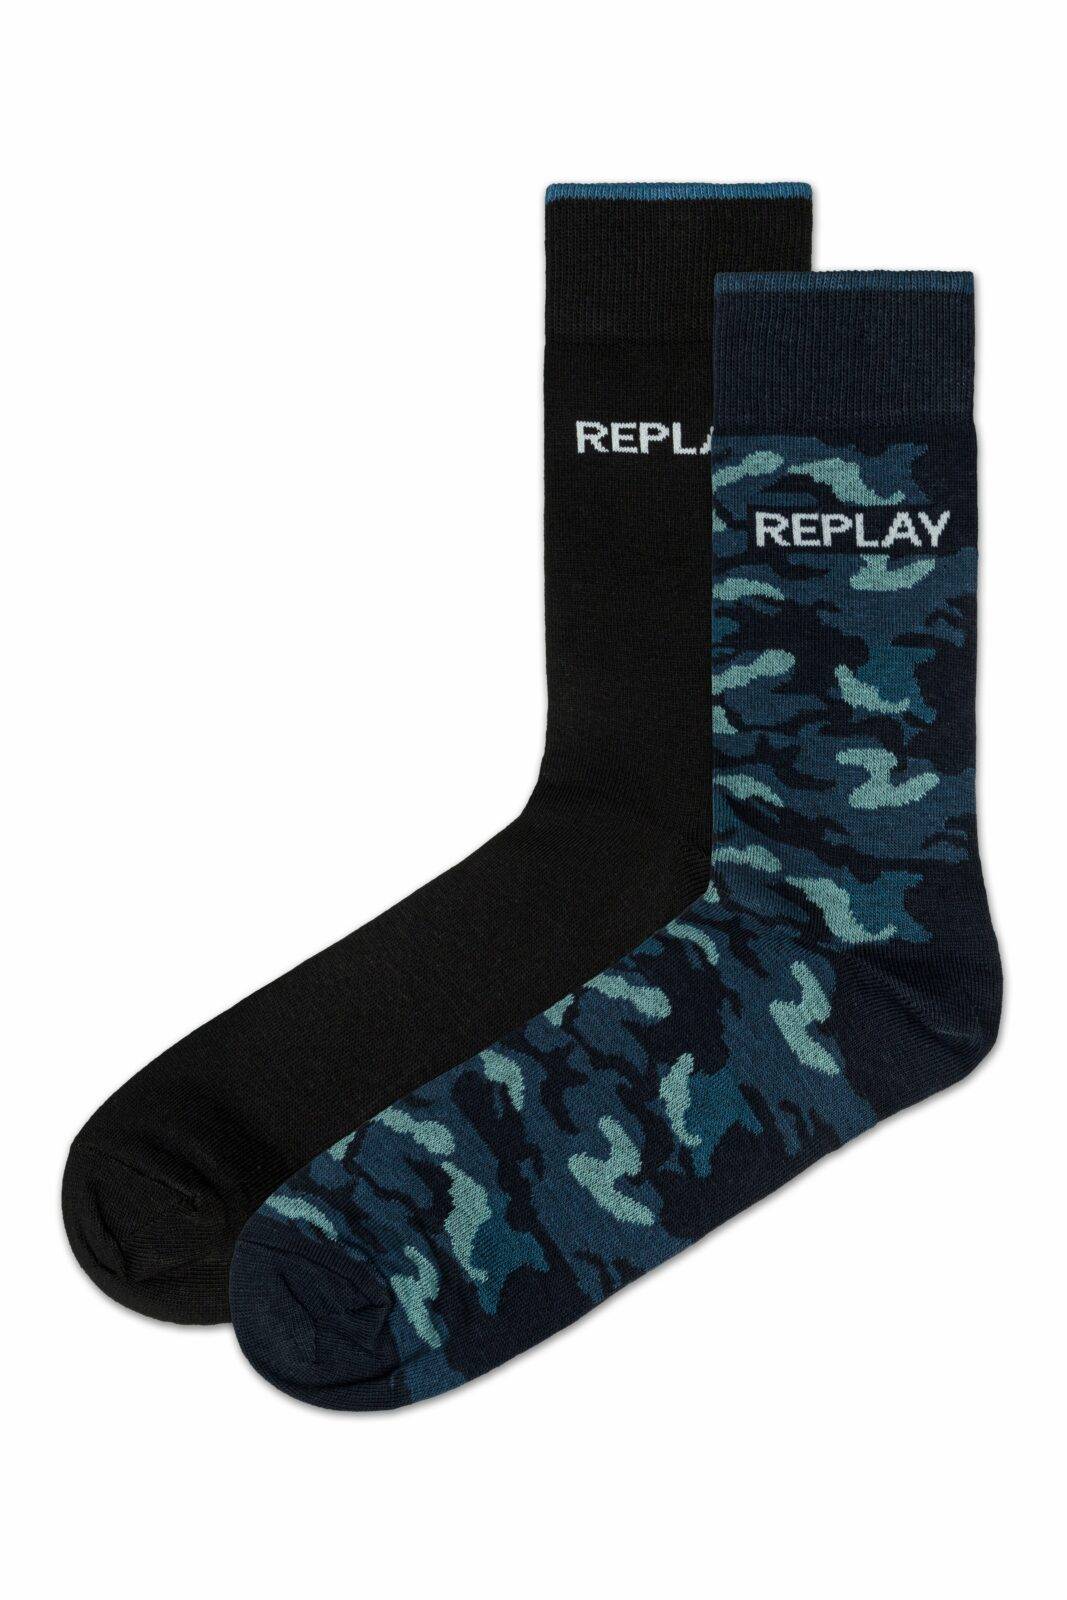 Replay Ponožky Casual Leg Logo&Camouflage 2Prs Banderole - Black/Camouflage